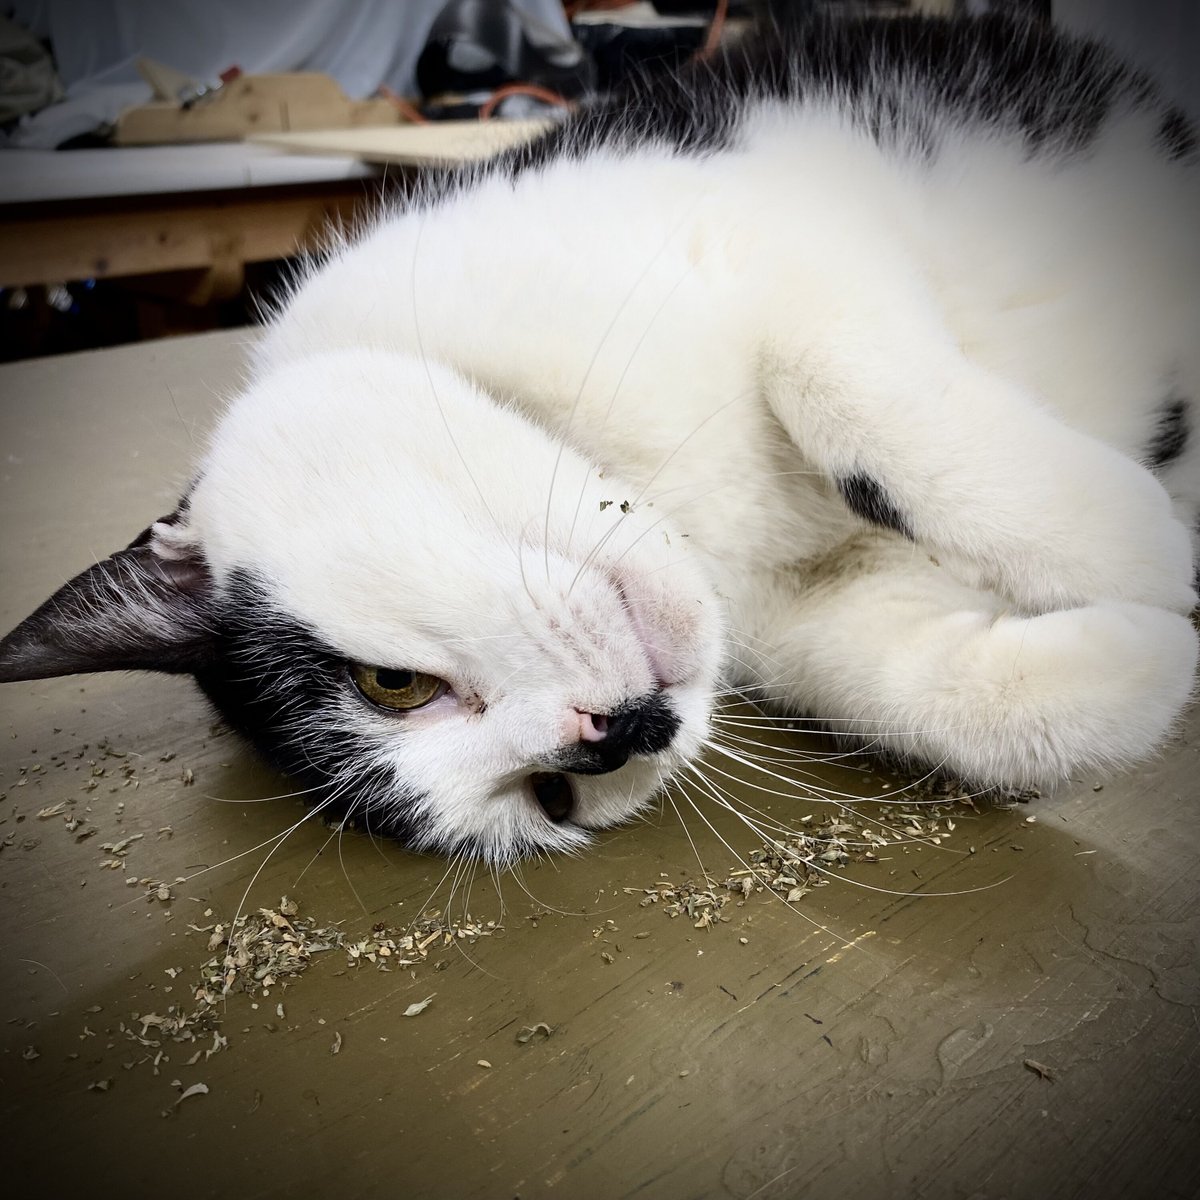 'High.'👋 #happycaturday, all!😻

#caturday #cats #felinelove